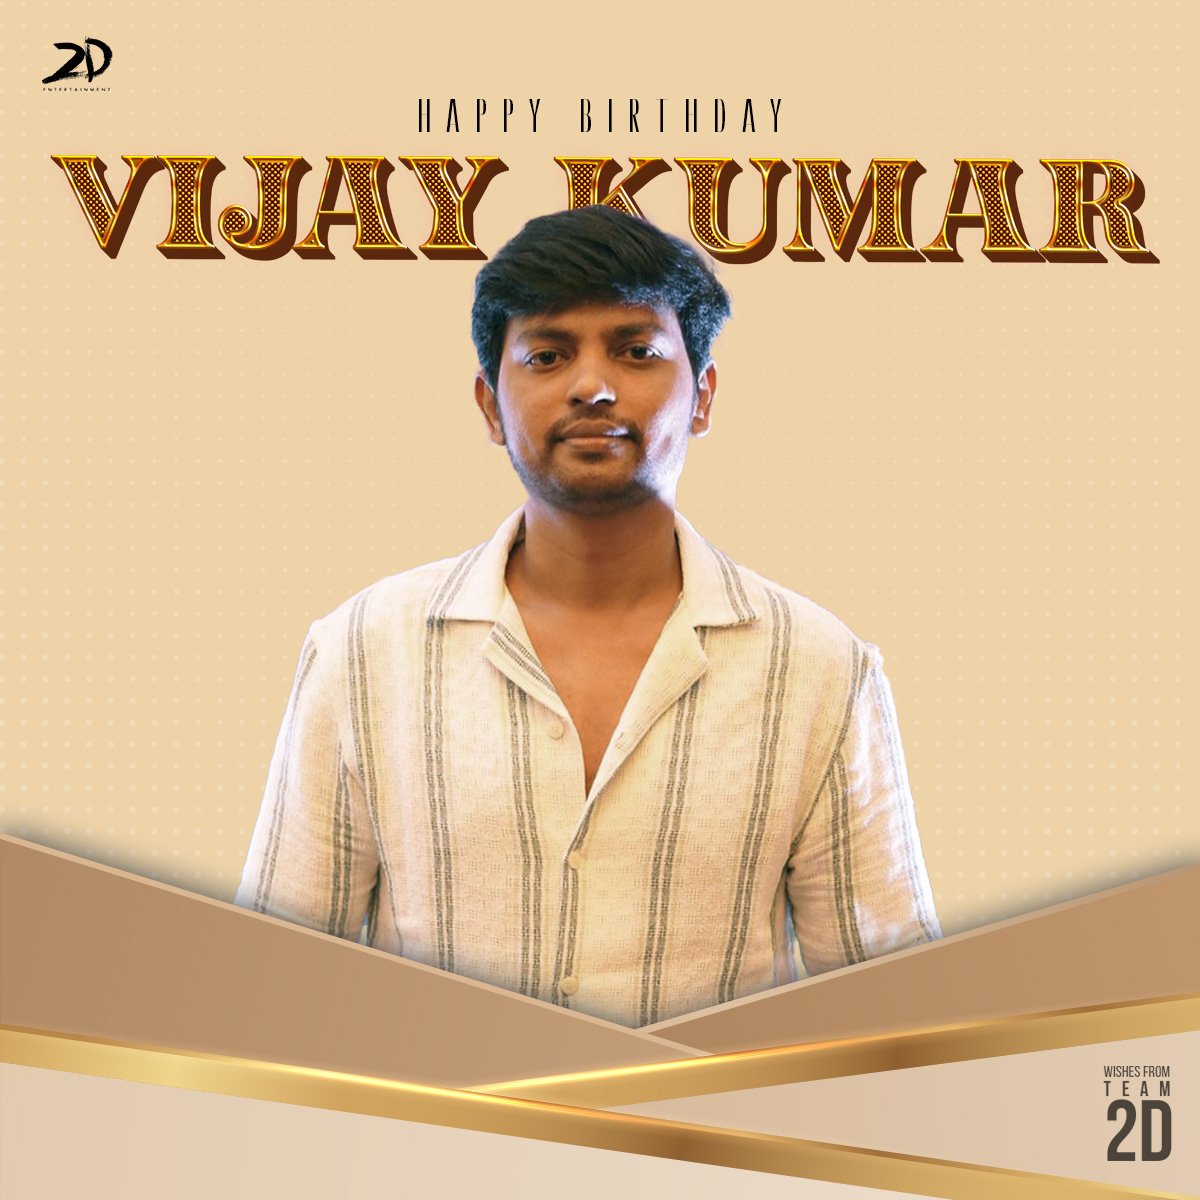 Wishing the multi-faceted and inspiring filmmaker @Vijay_B_Kumar a phenomenal birthday and a successful year ahead ✨ #HBDVijayKumar